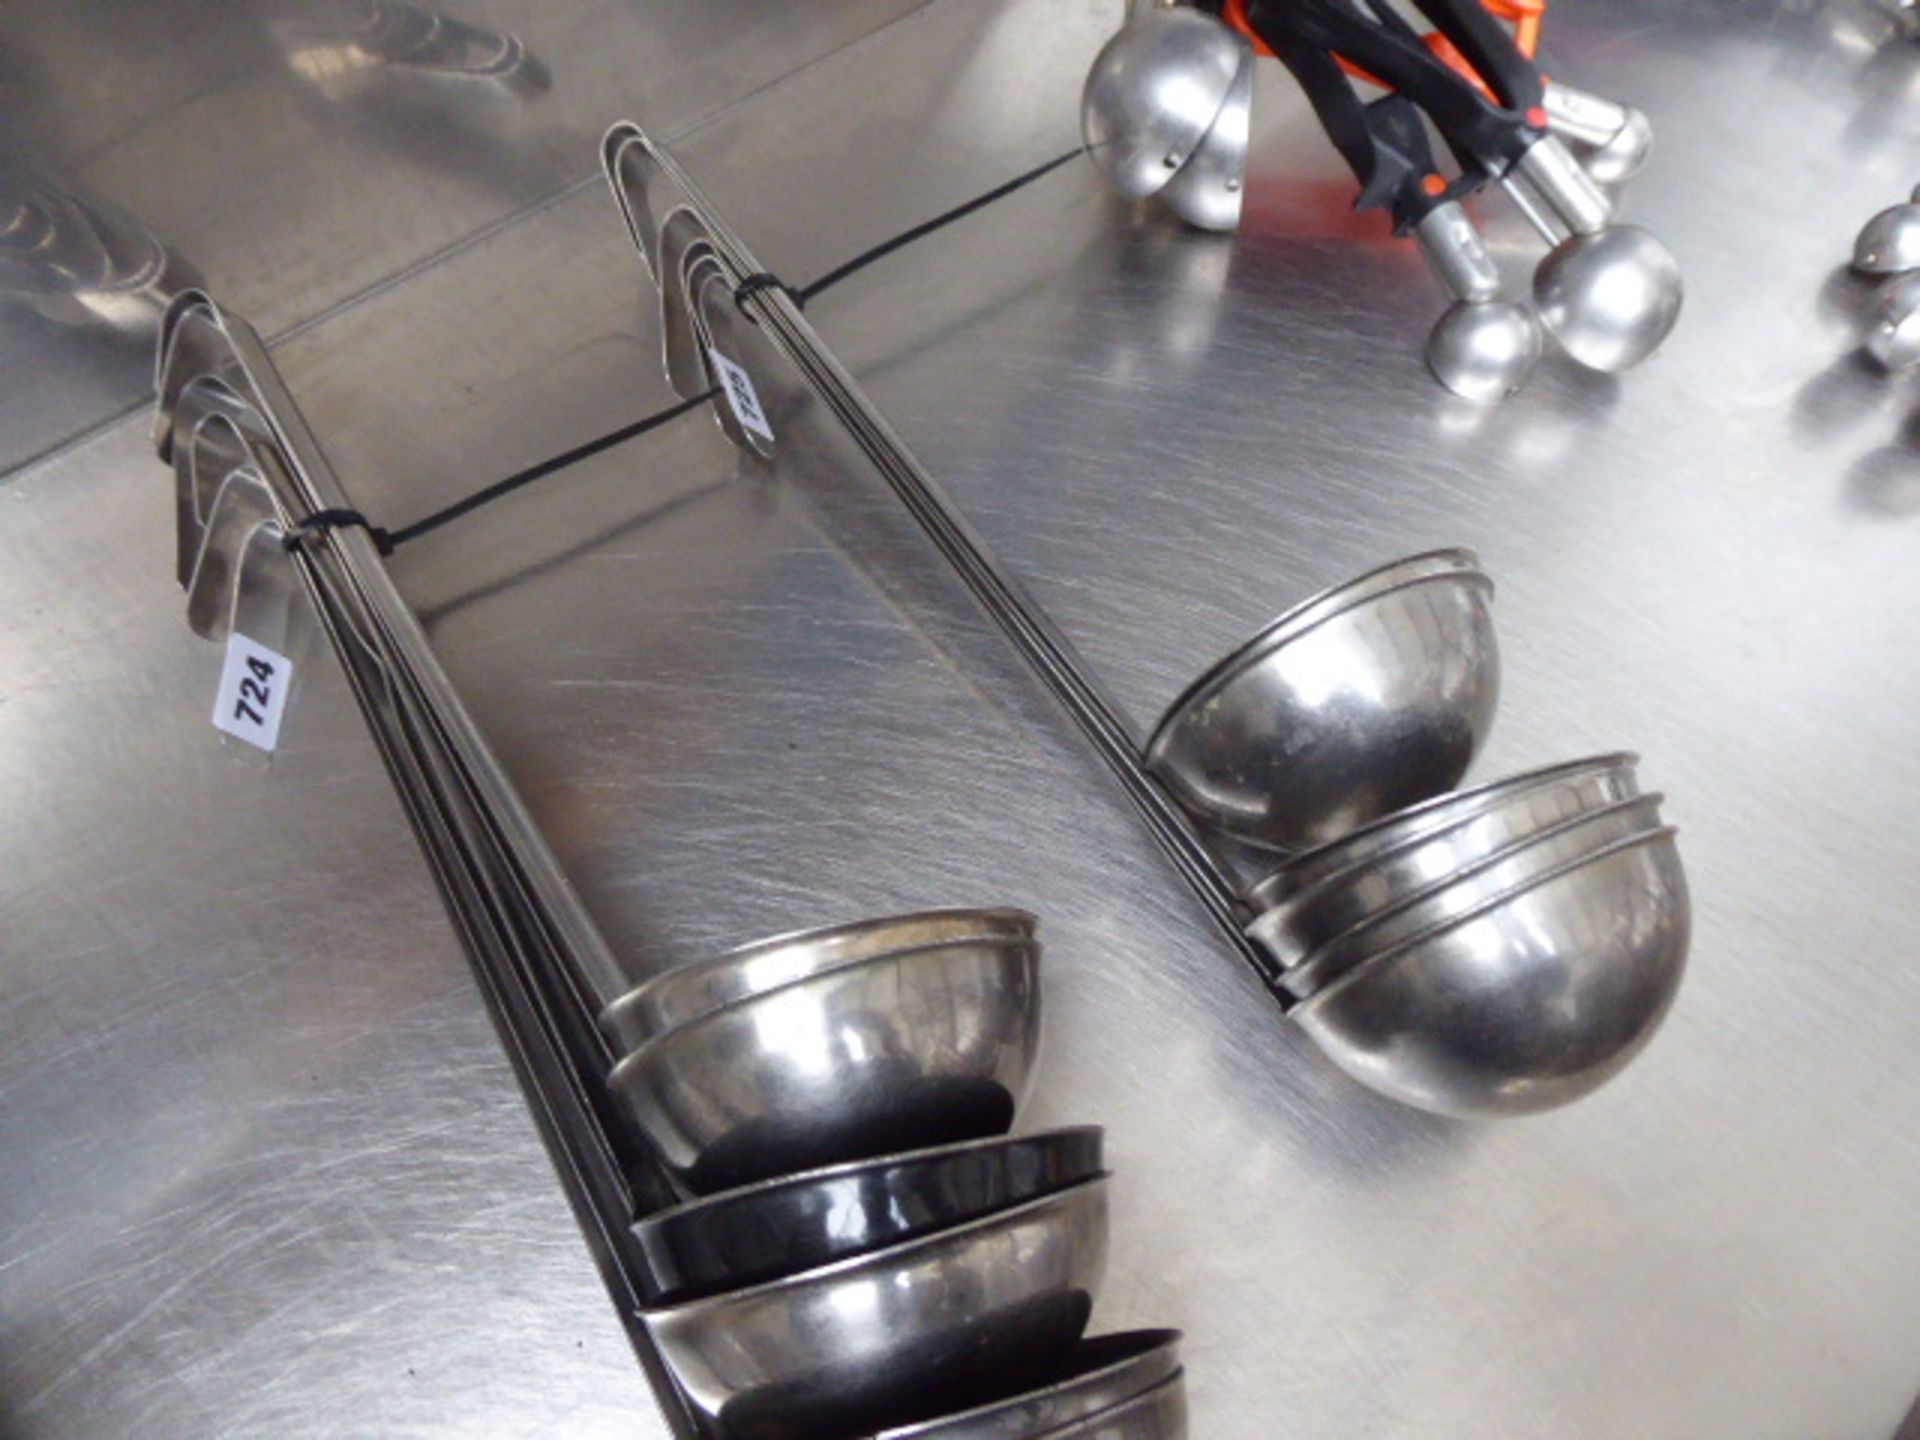 6 stainless steel ladles